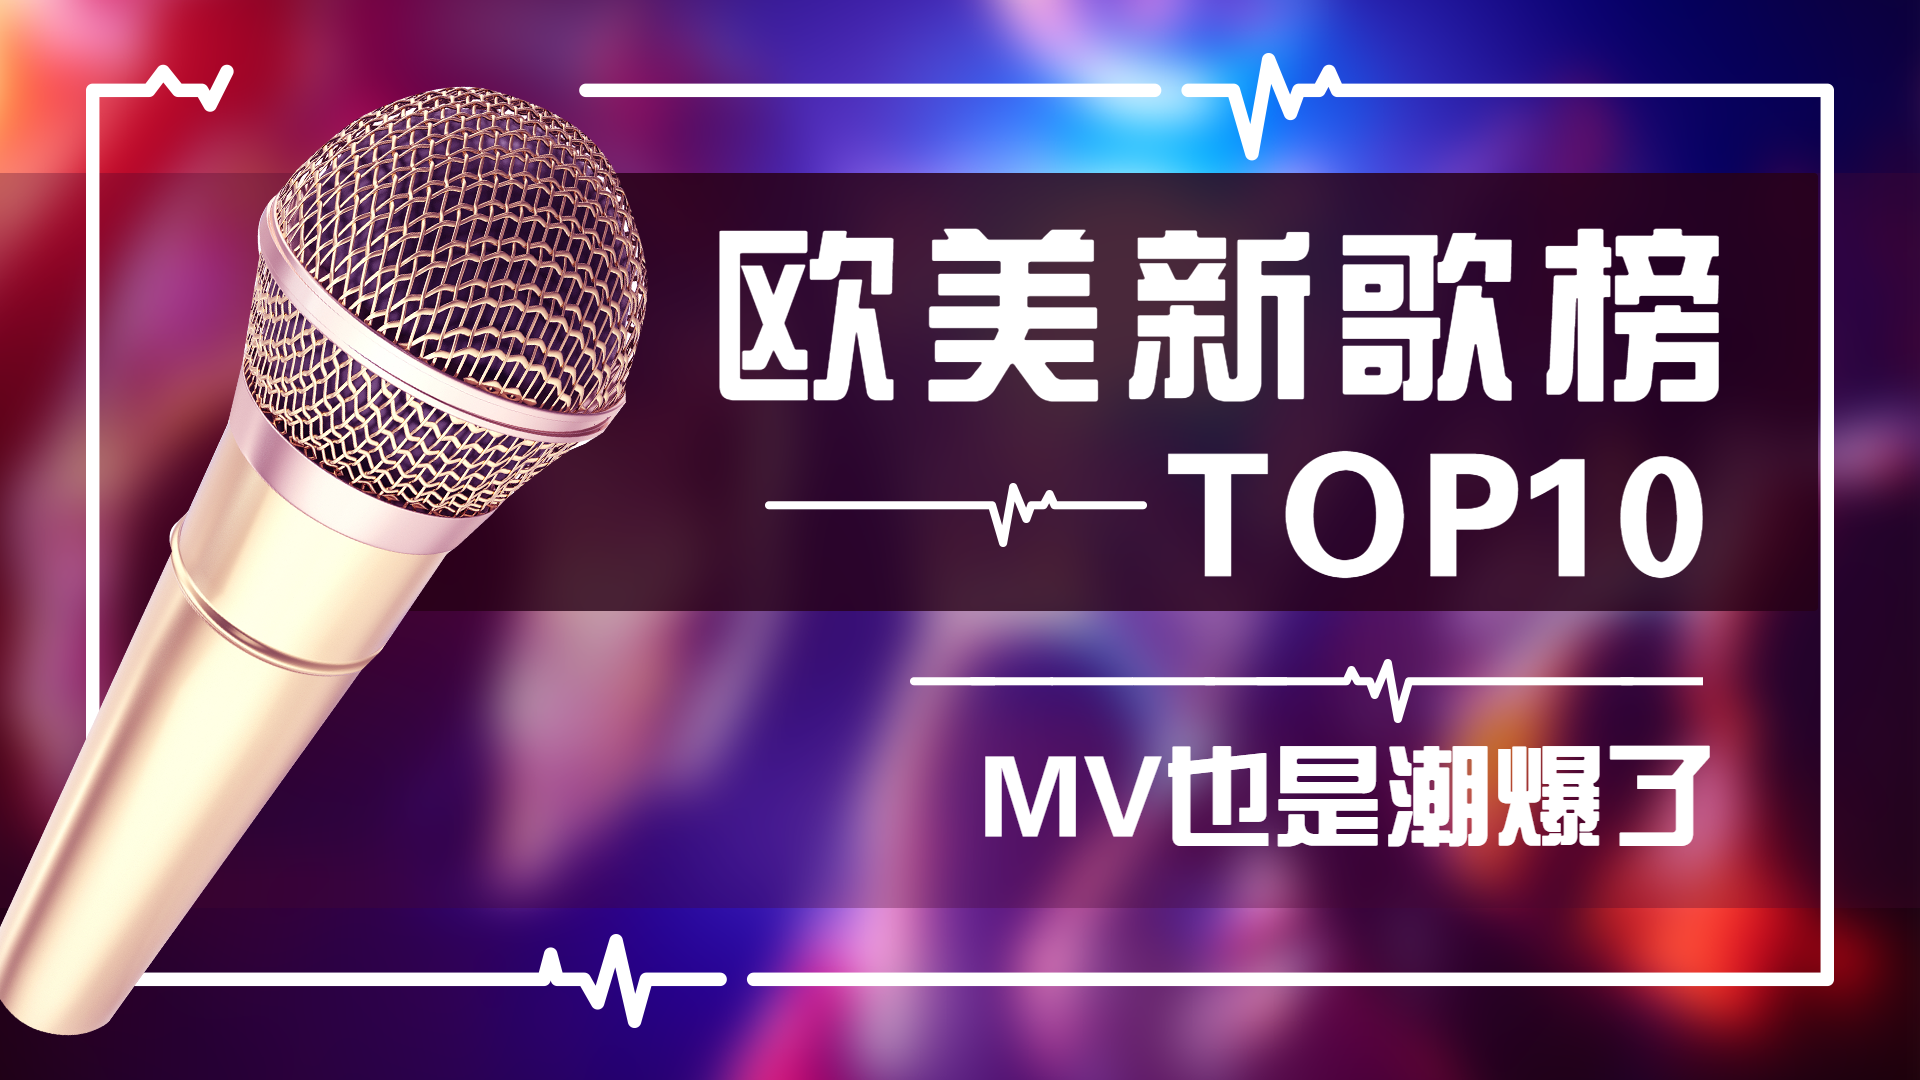 KTV新歌音乐周榜打榜top10横版视频封面预览效果